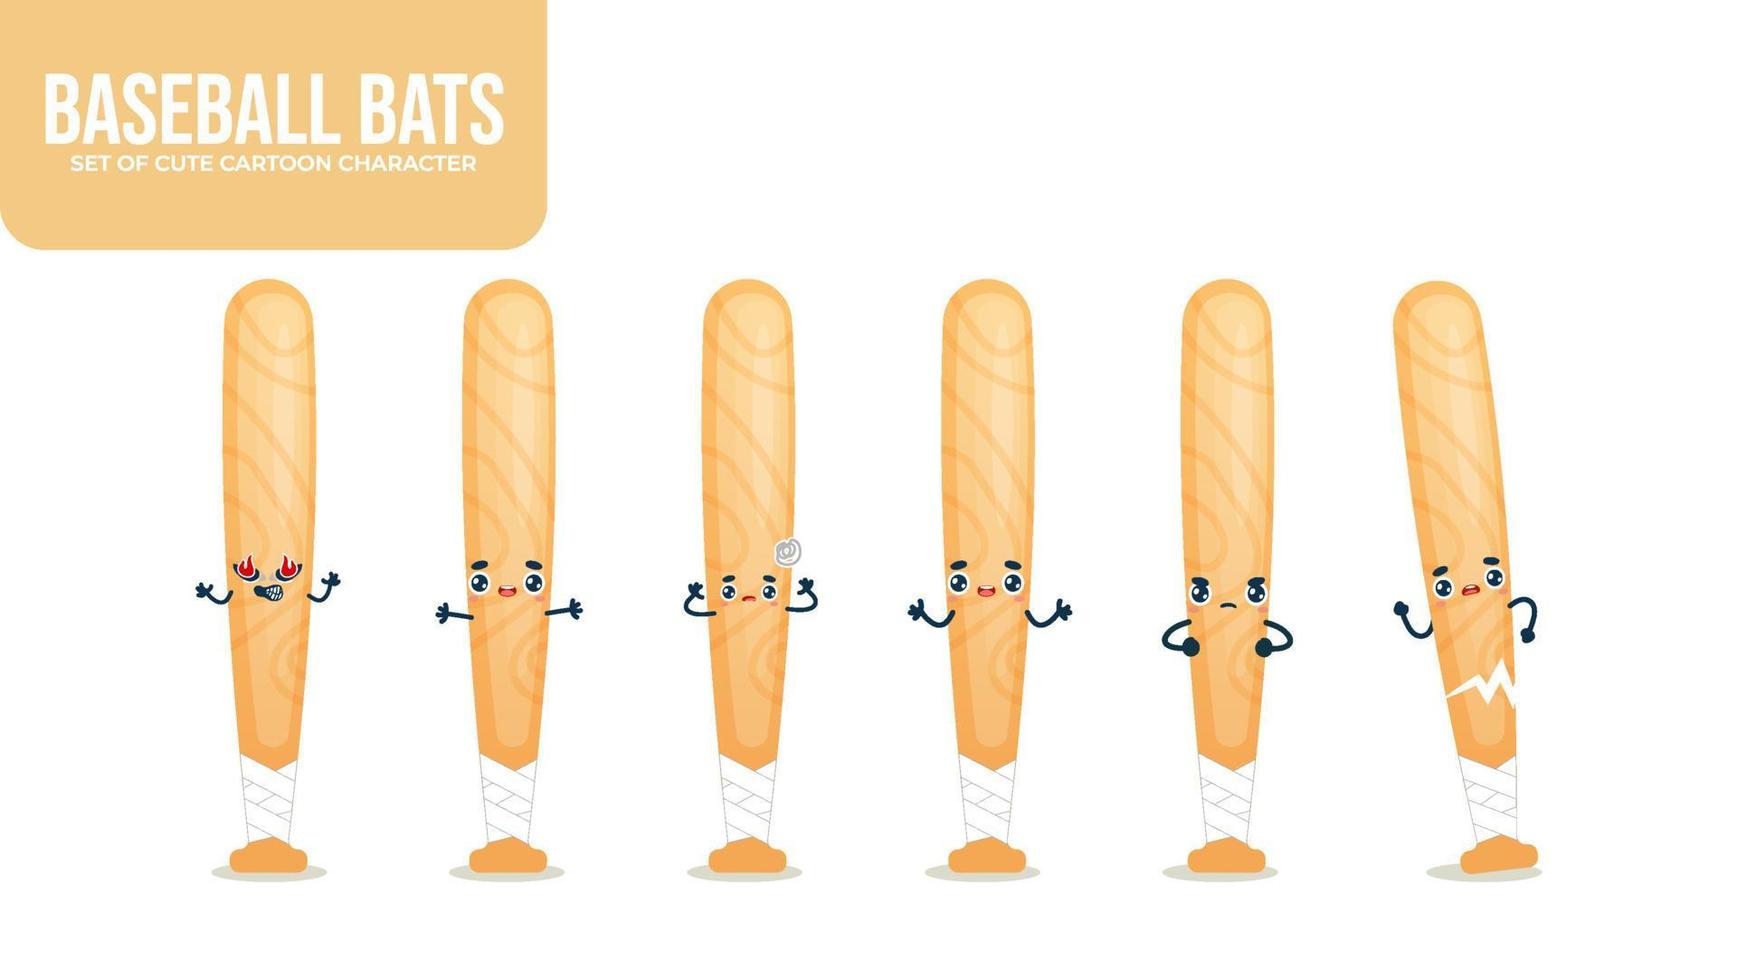 Set of cute baseball bats cartoon character with different poses baseball equipment vector